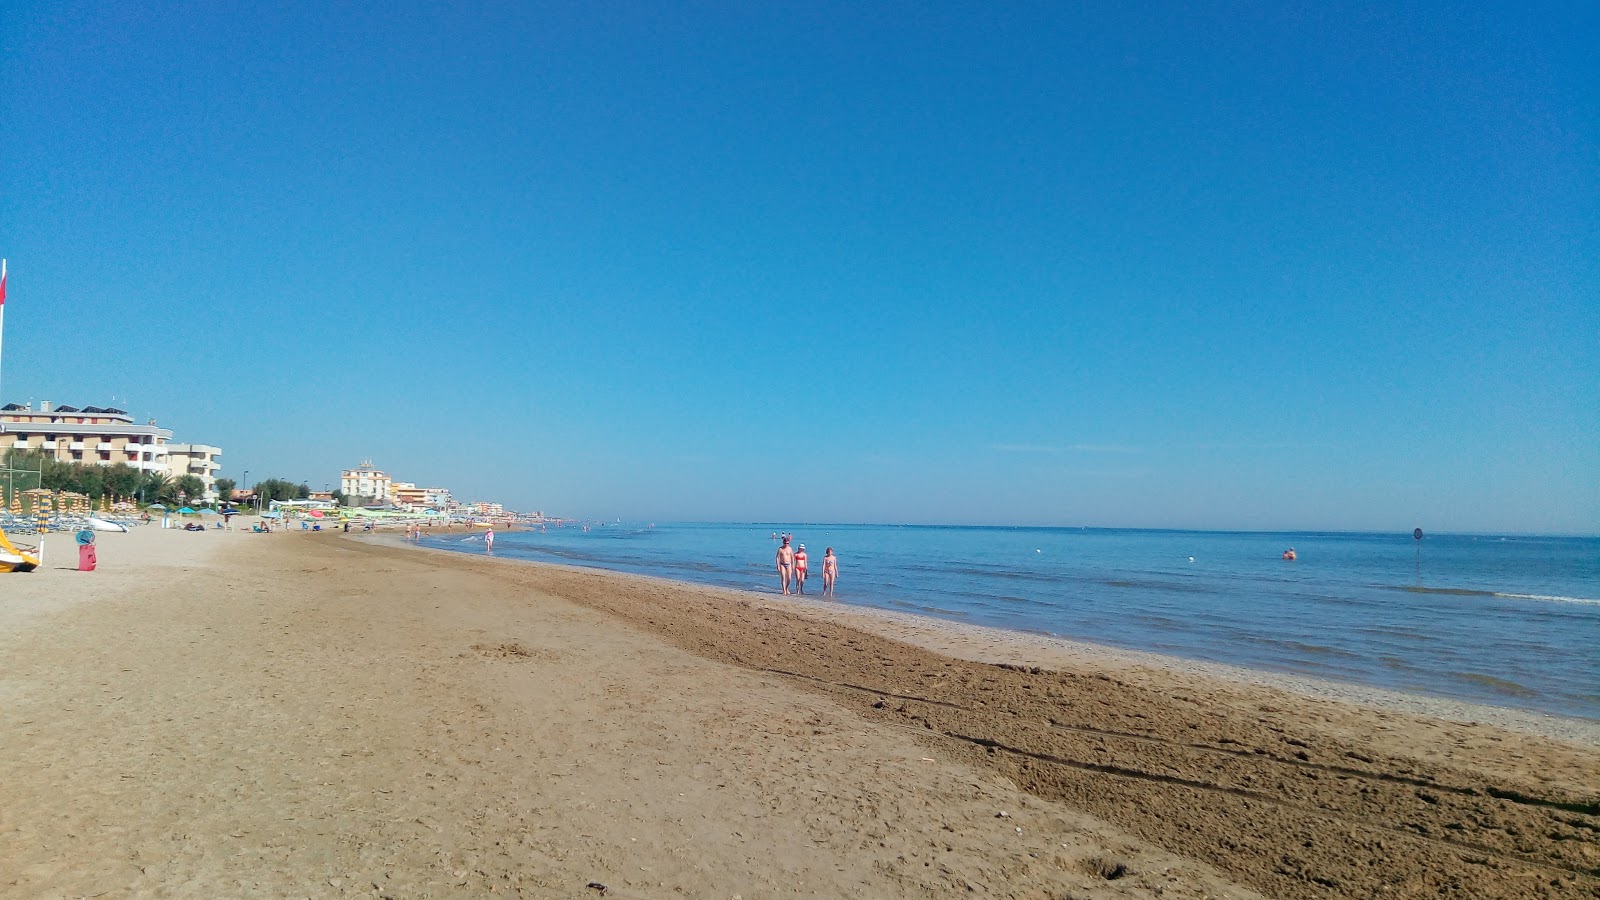 Photo of Marotta beach with long straight shore